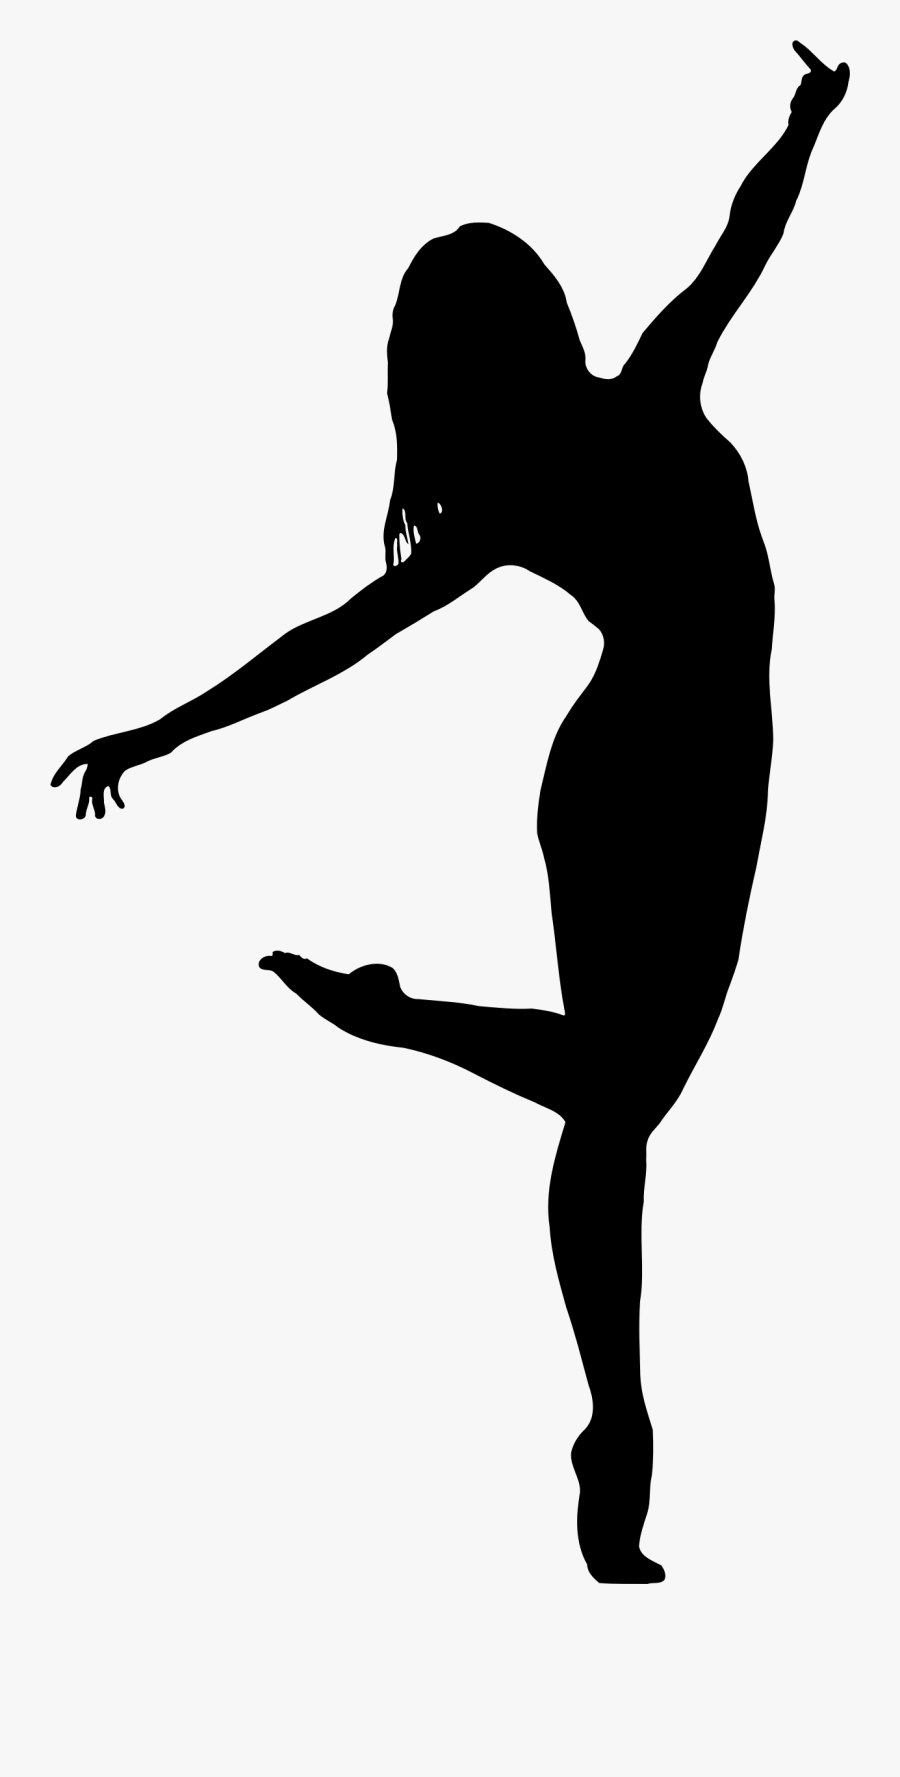 Dancer Silhouette - Dancer Silhouette Transparent Background, Transparent Clipart